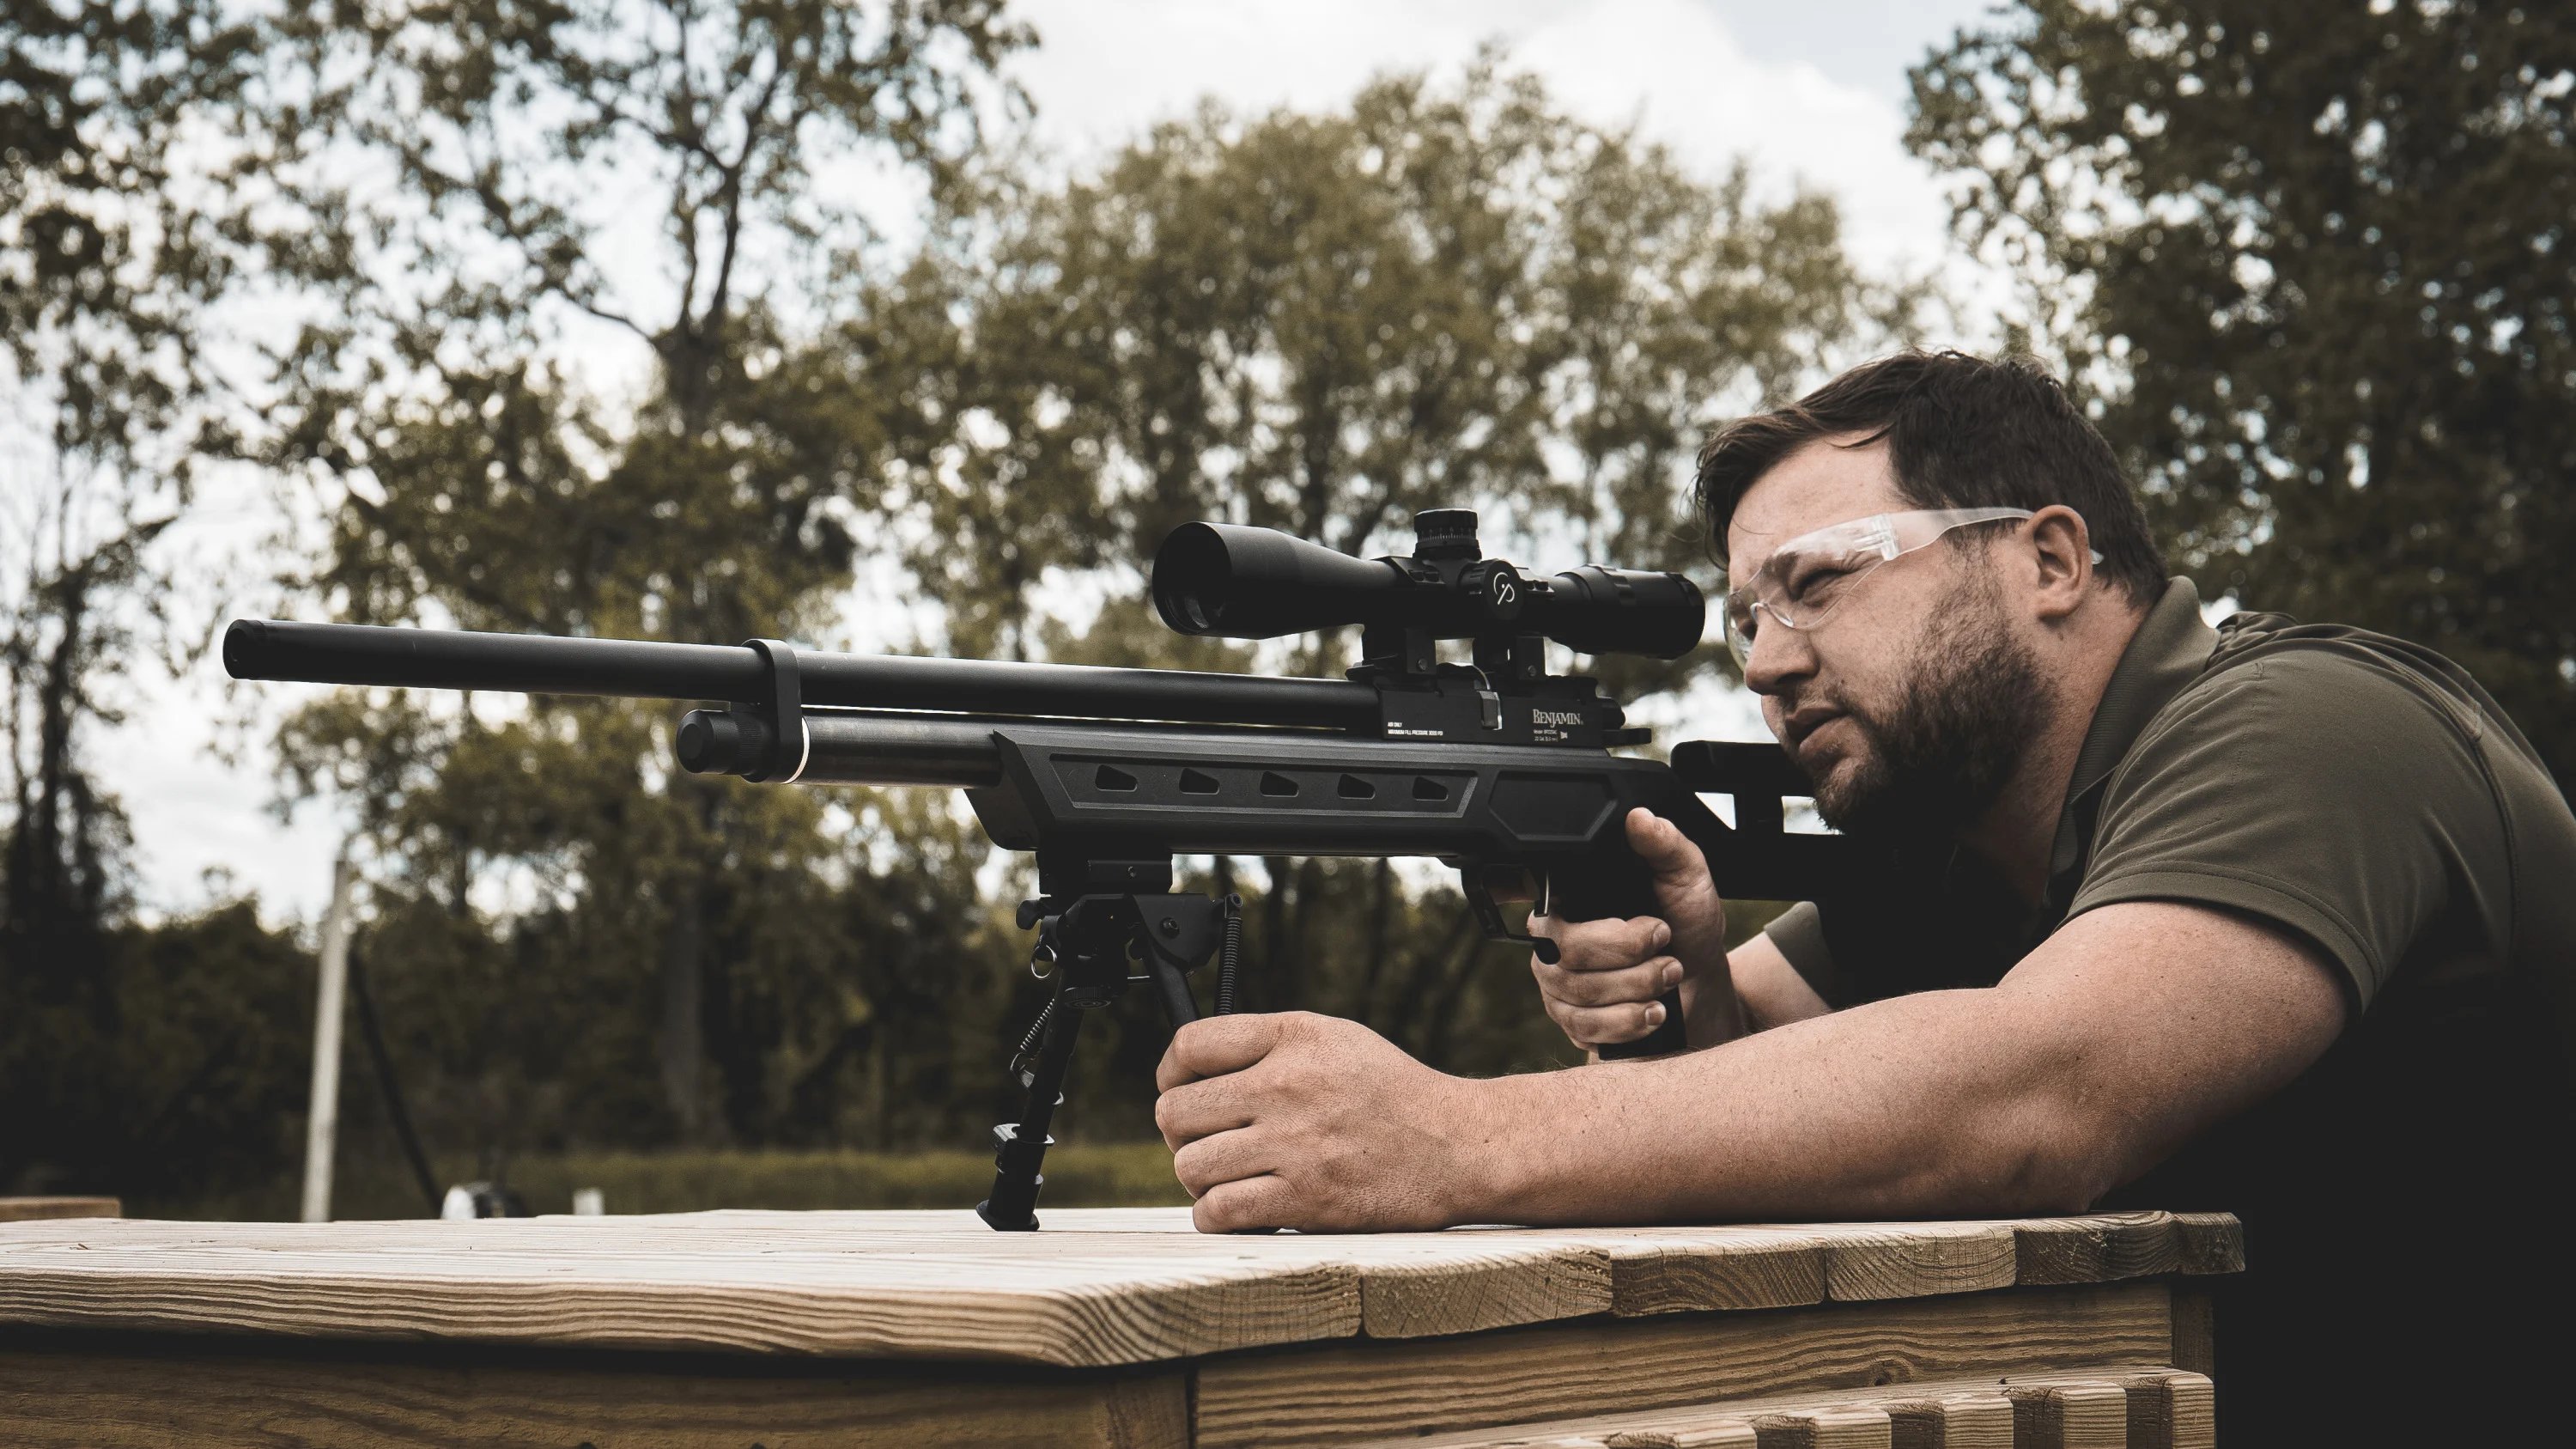 A man aiming through the scope on a Benjamin Armada Semi-Automatic tactical air rifle